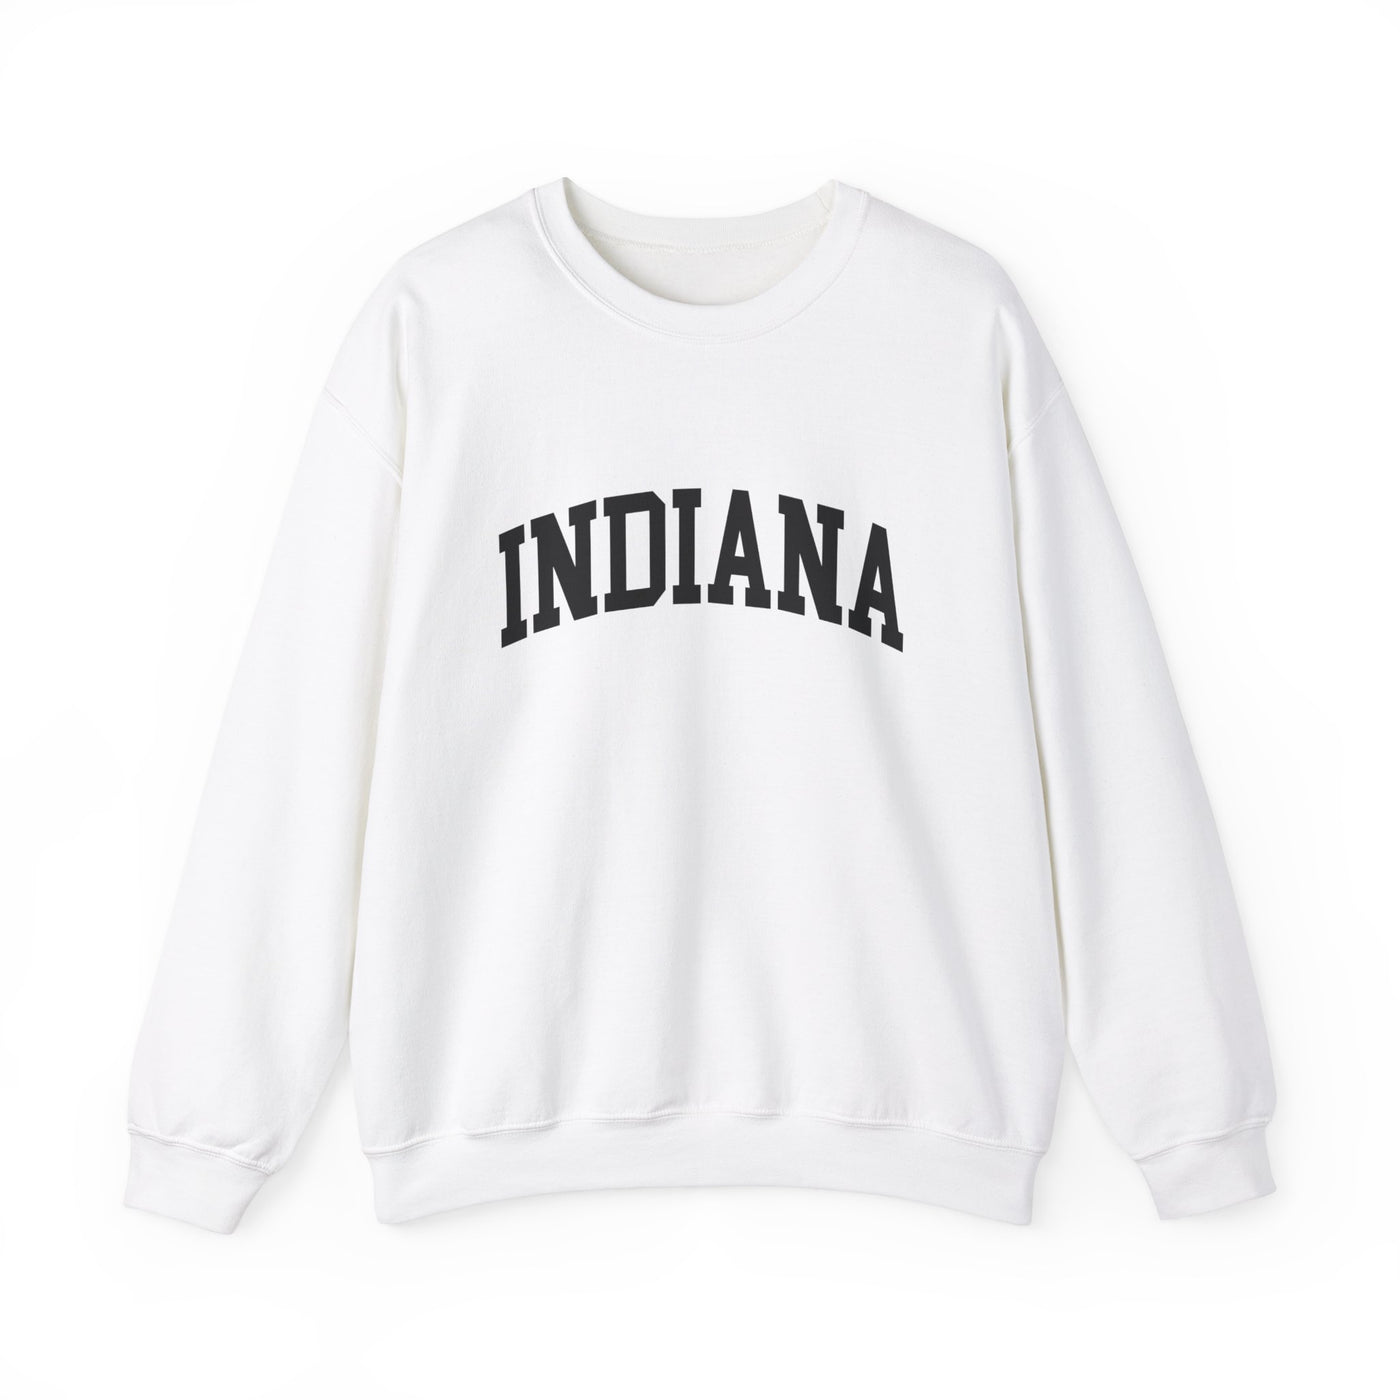 Indiana Collegiate Crewneck Sweatshirt